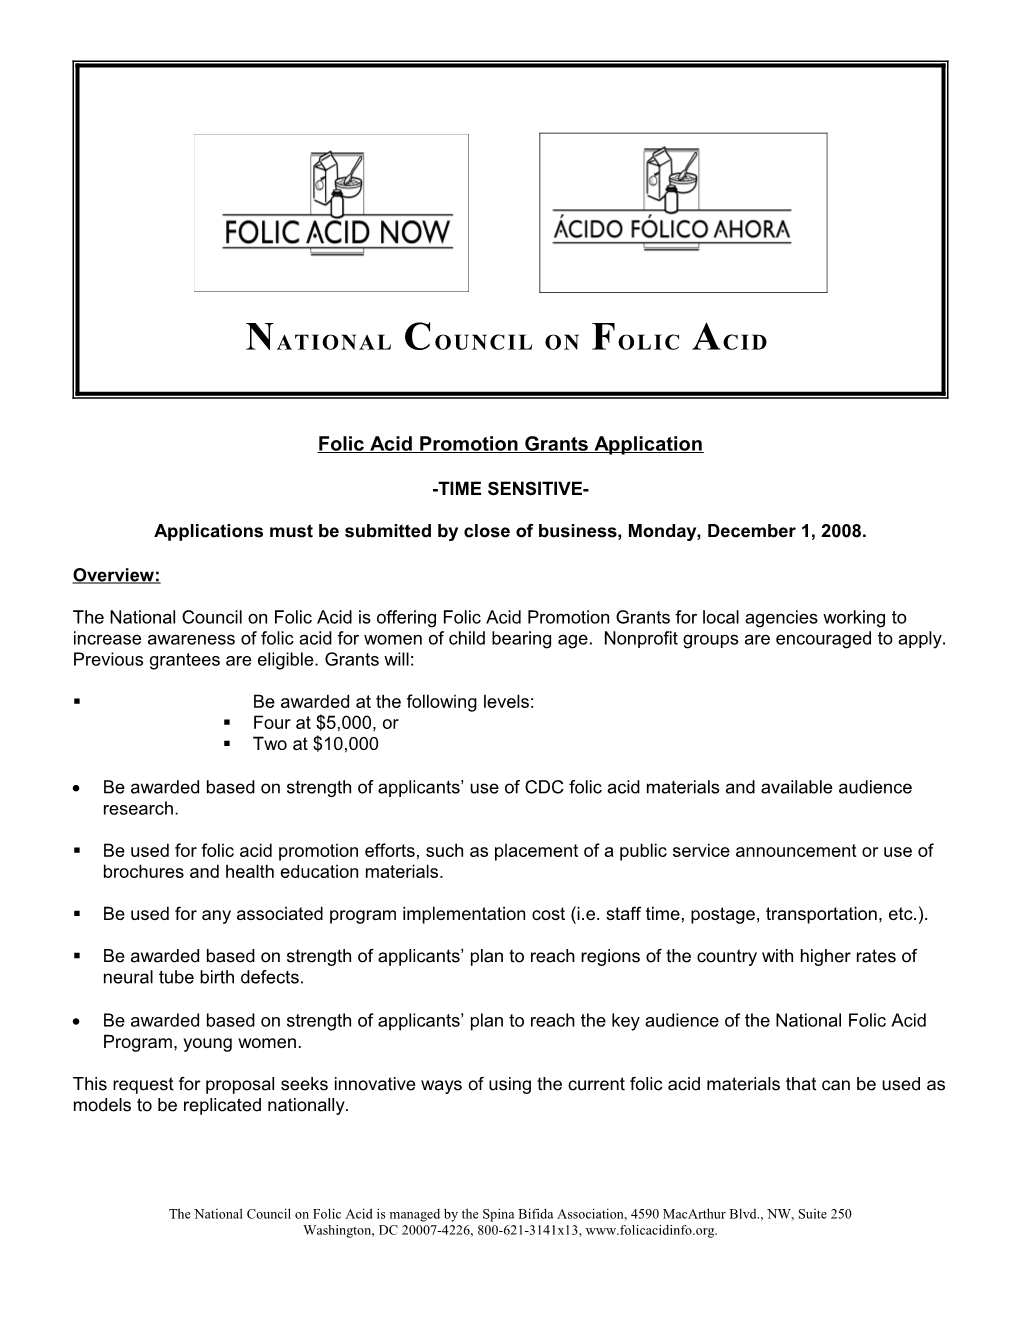 National Council on Folic Acid